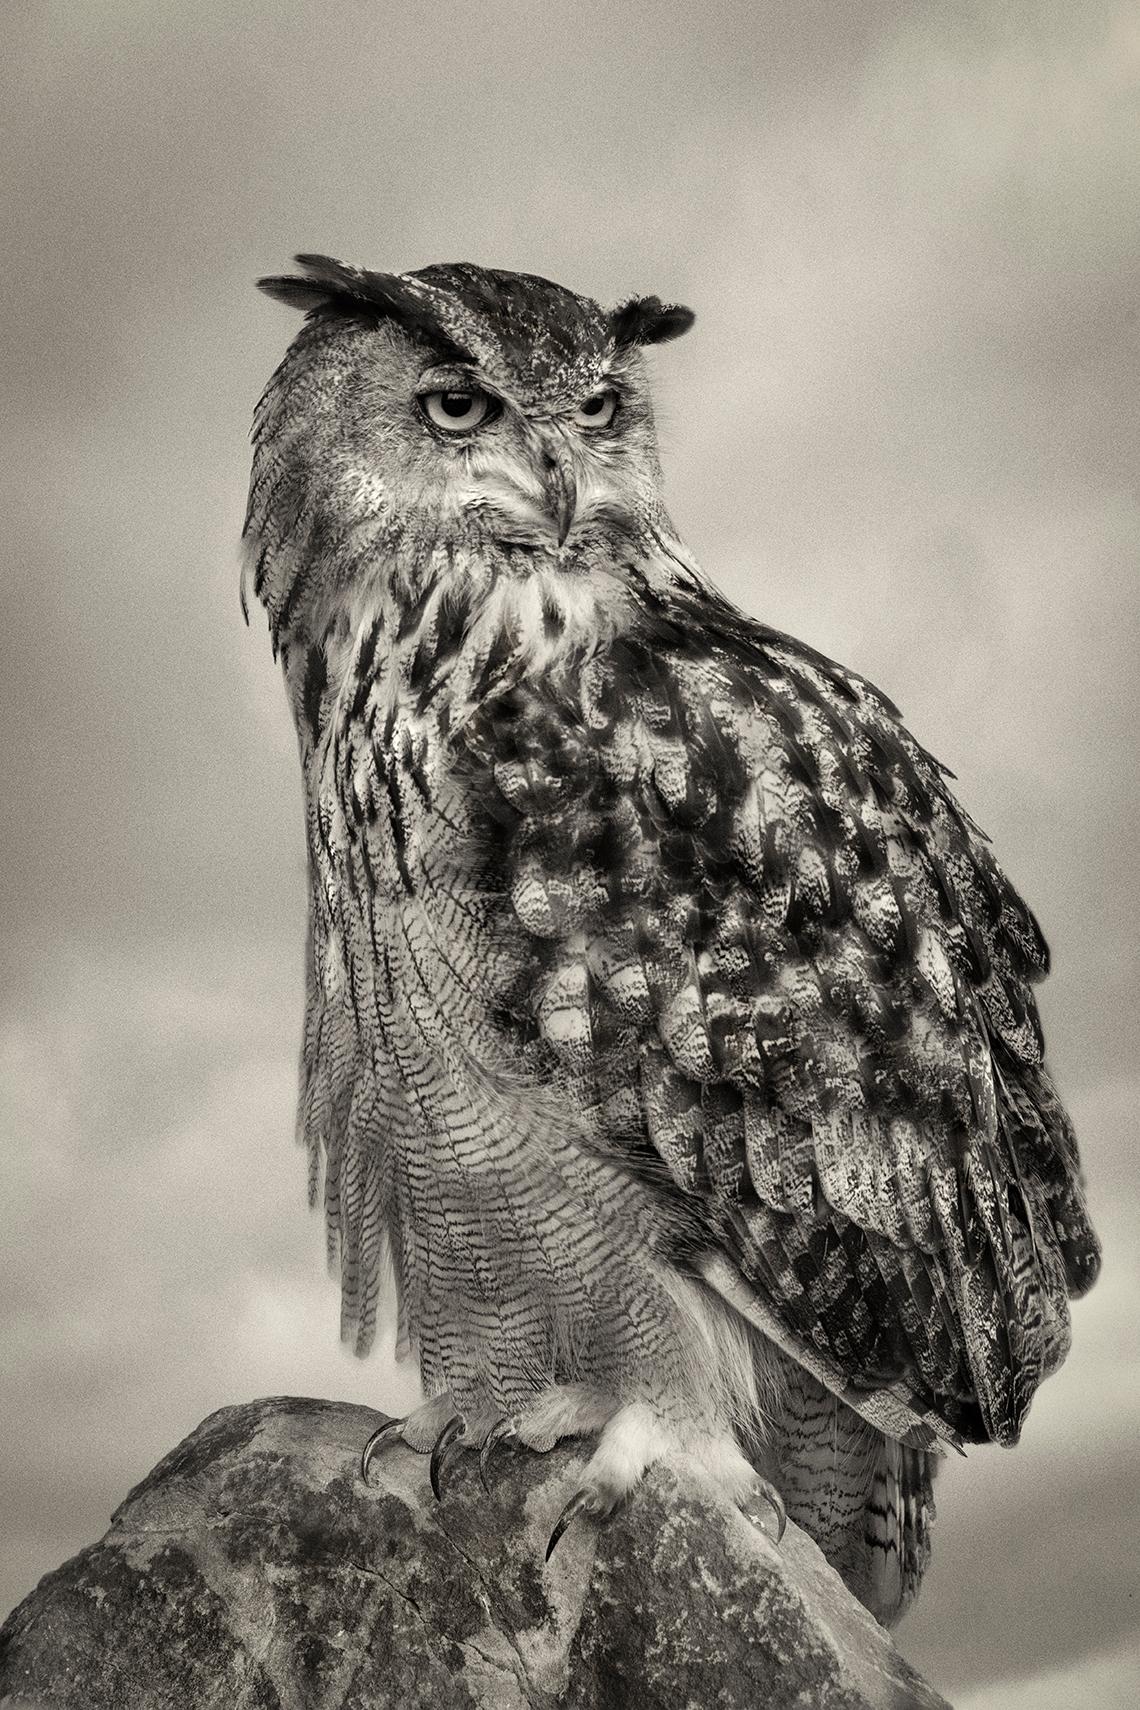 Beth Moon Black and White Photograph - Eagle Owl, limited edition photograph, signed, Platinum/Palladium Print